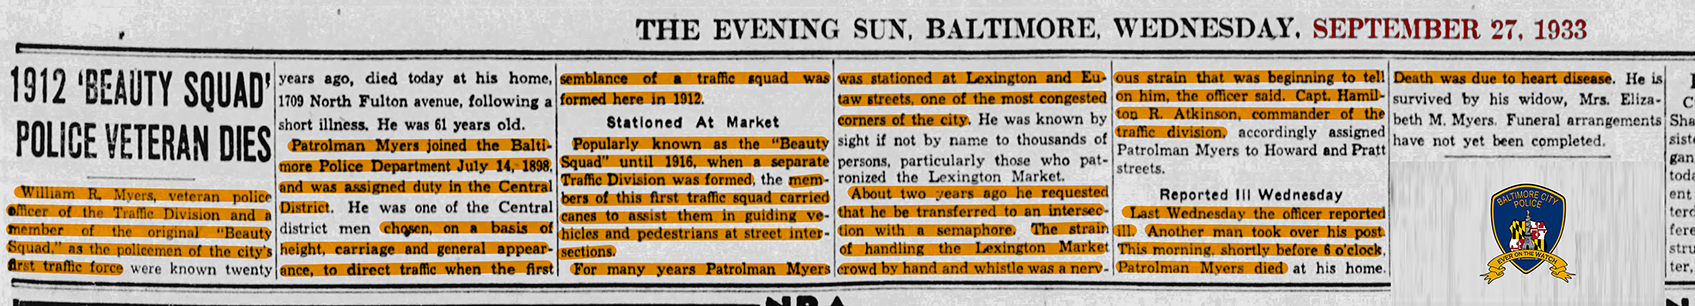 The Evening Sun Wed Sep 27 1933 72